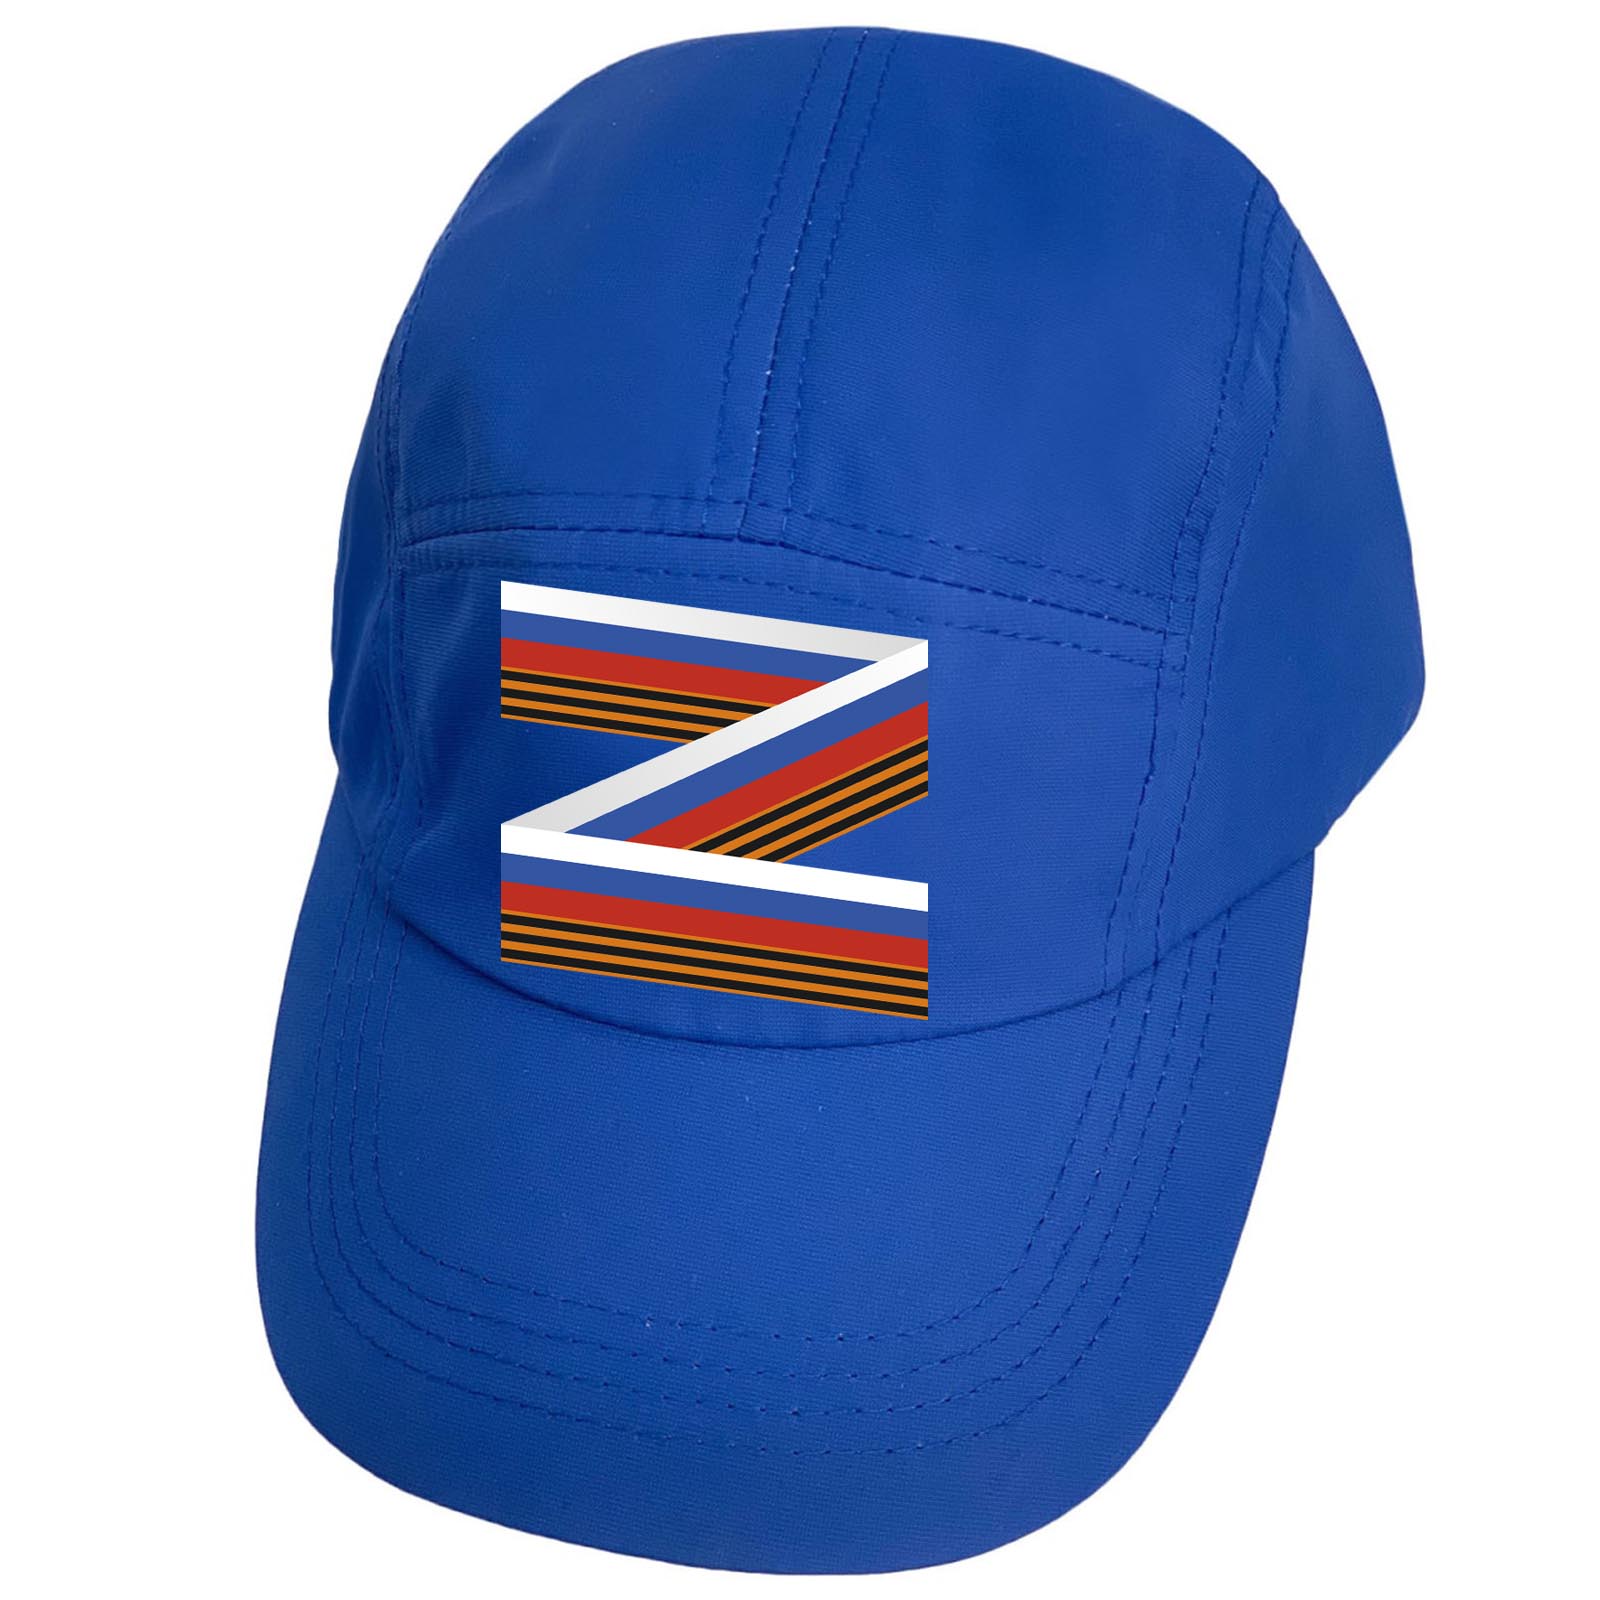 Ярко-синяя кепка с символом Z